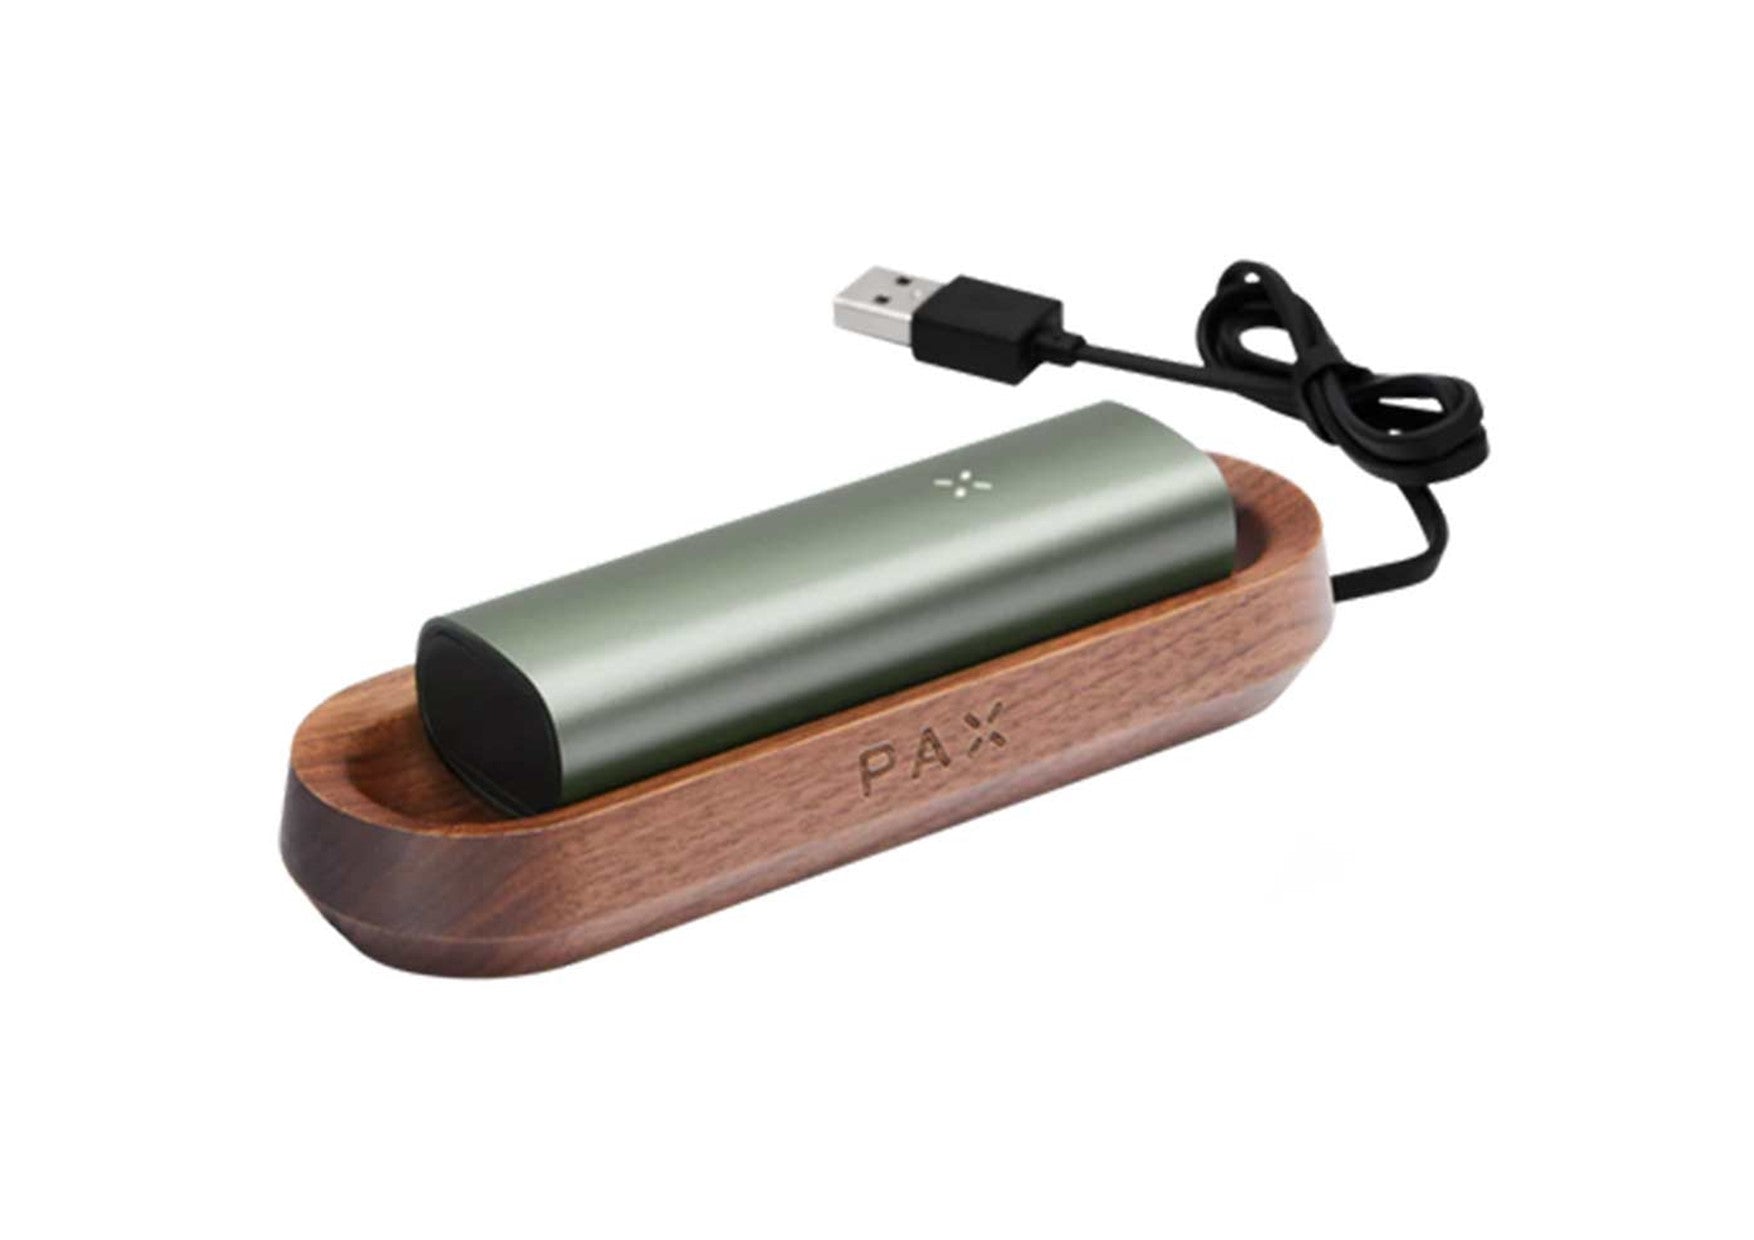 PAX Labs | Charging Tray | Walnut